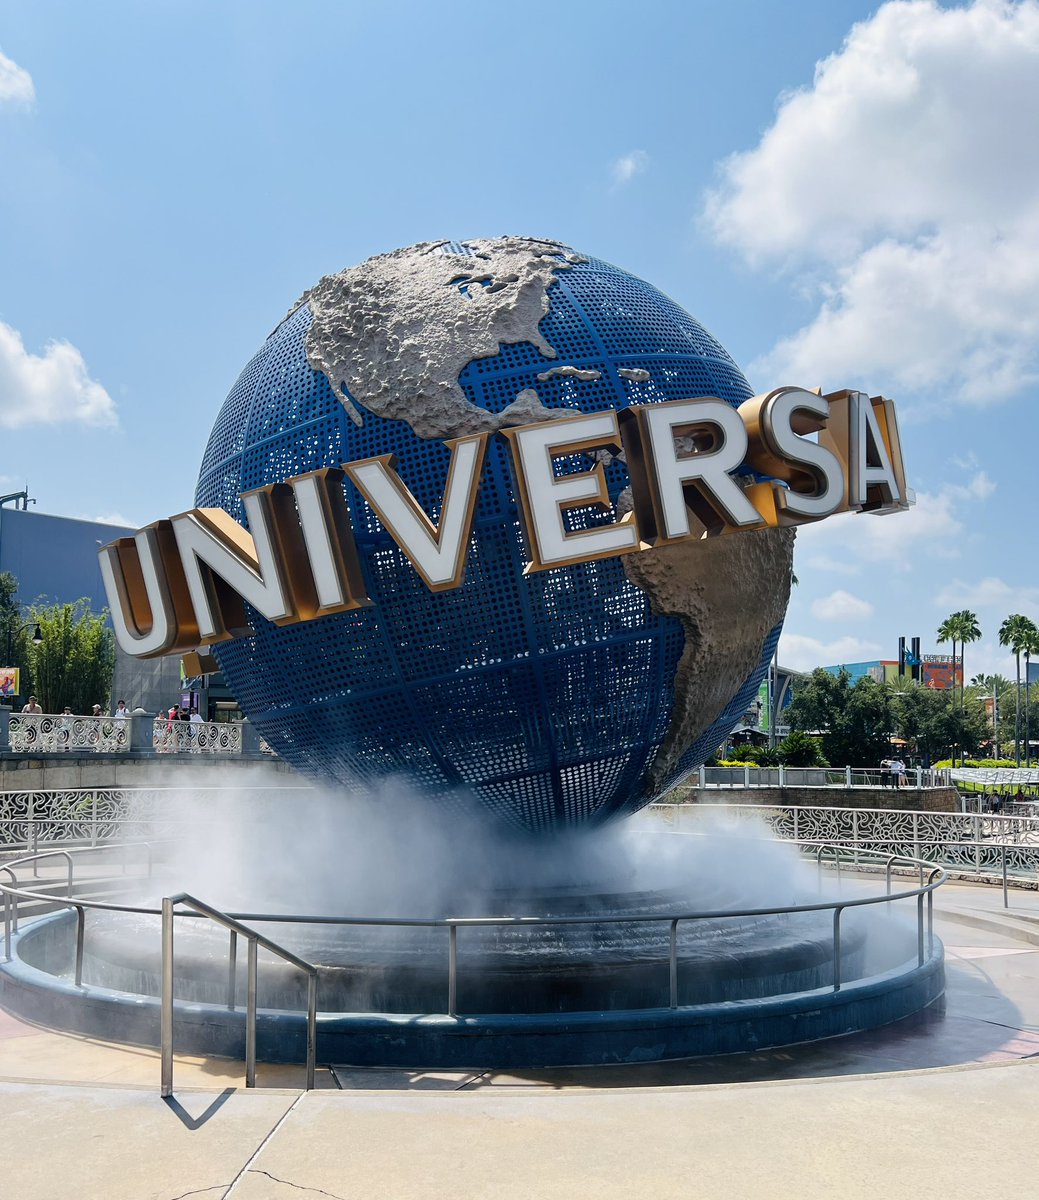 #UniversalStudio

#FloridaVacation #OrlandoCity